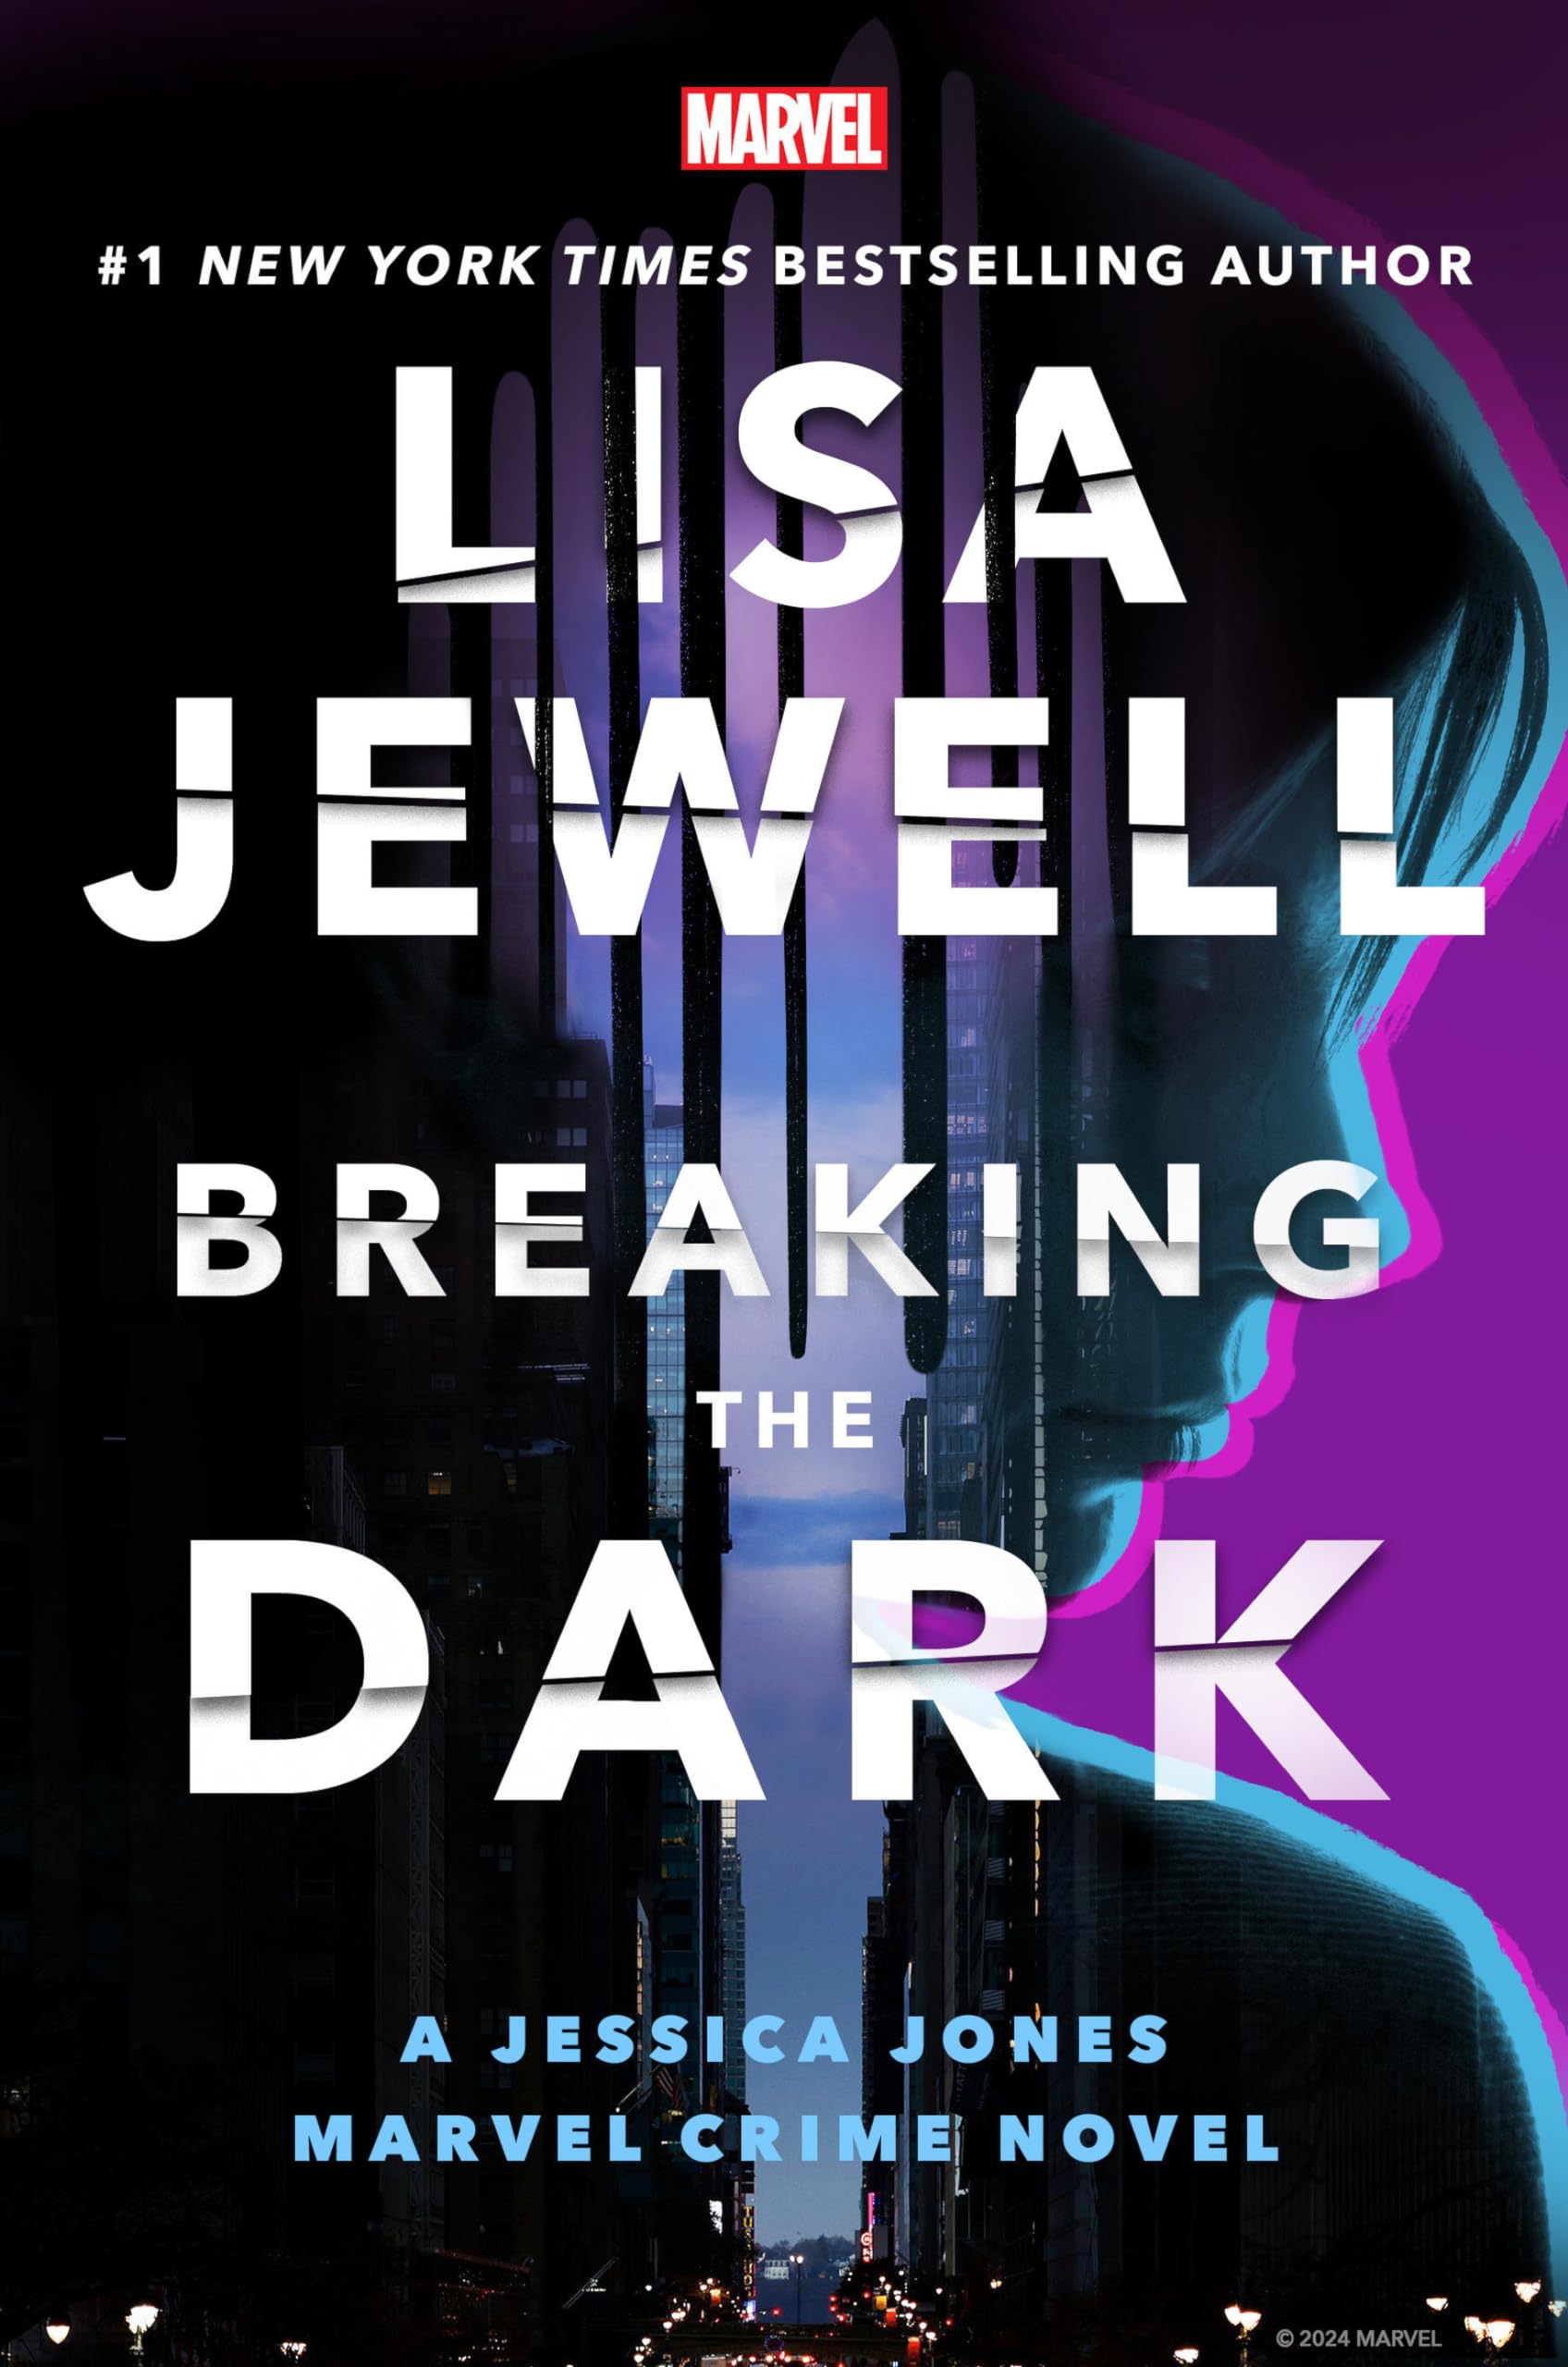 Breaking the Dark: A Jessica Jones Marvel Crime Novel by Jewell, Lisa